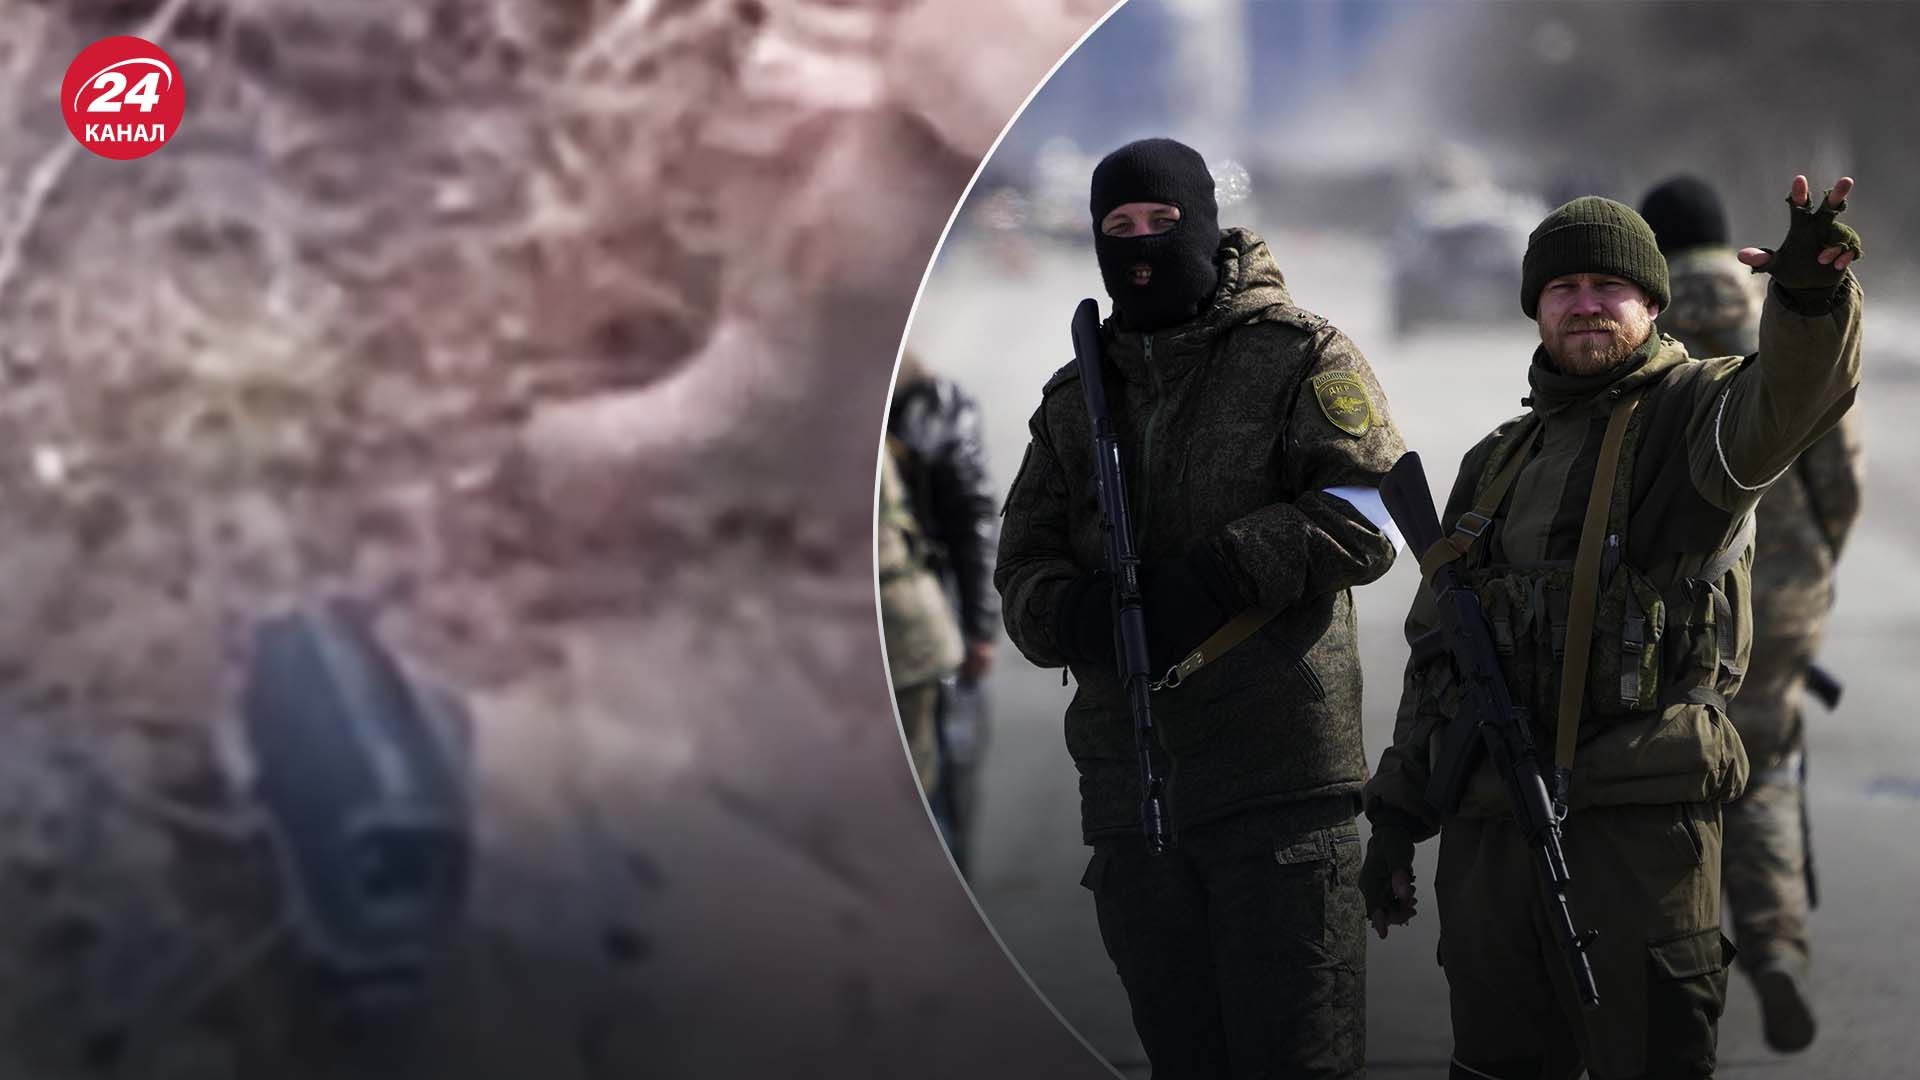 На Запоріжжі нашестя українських БпЛА - як з цим борються росіяни - 24 Канал